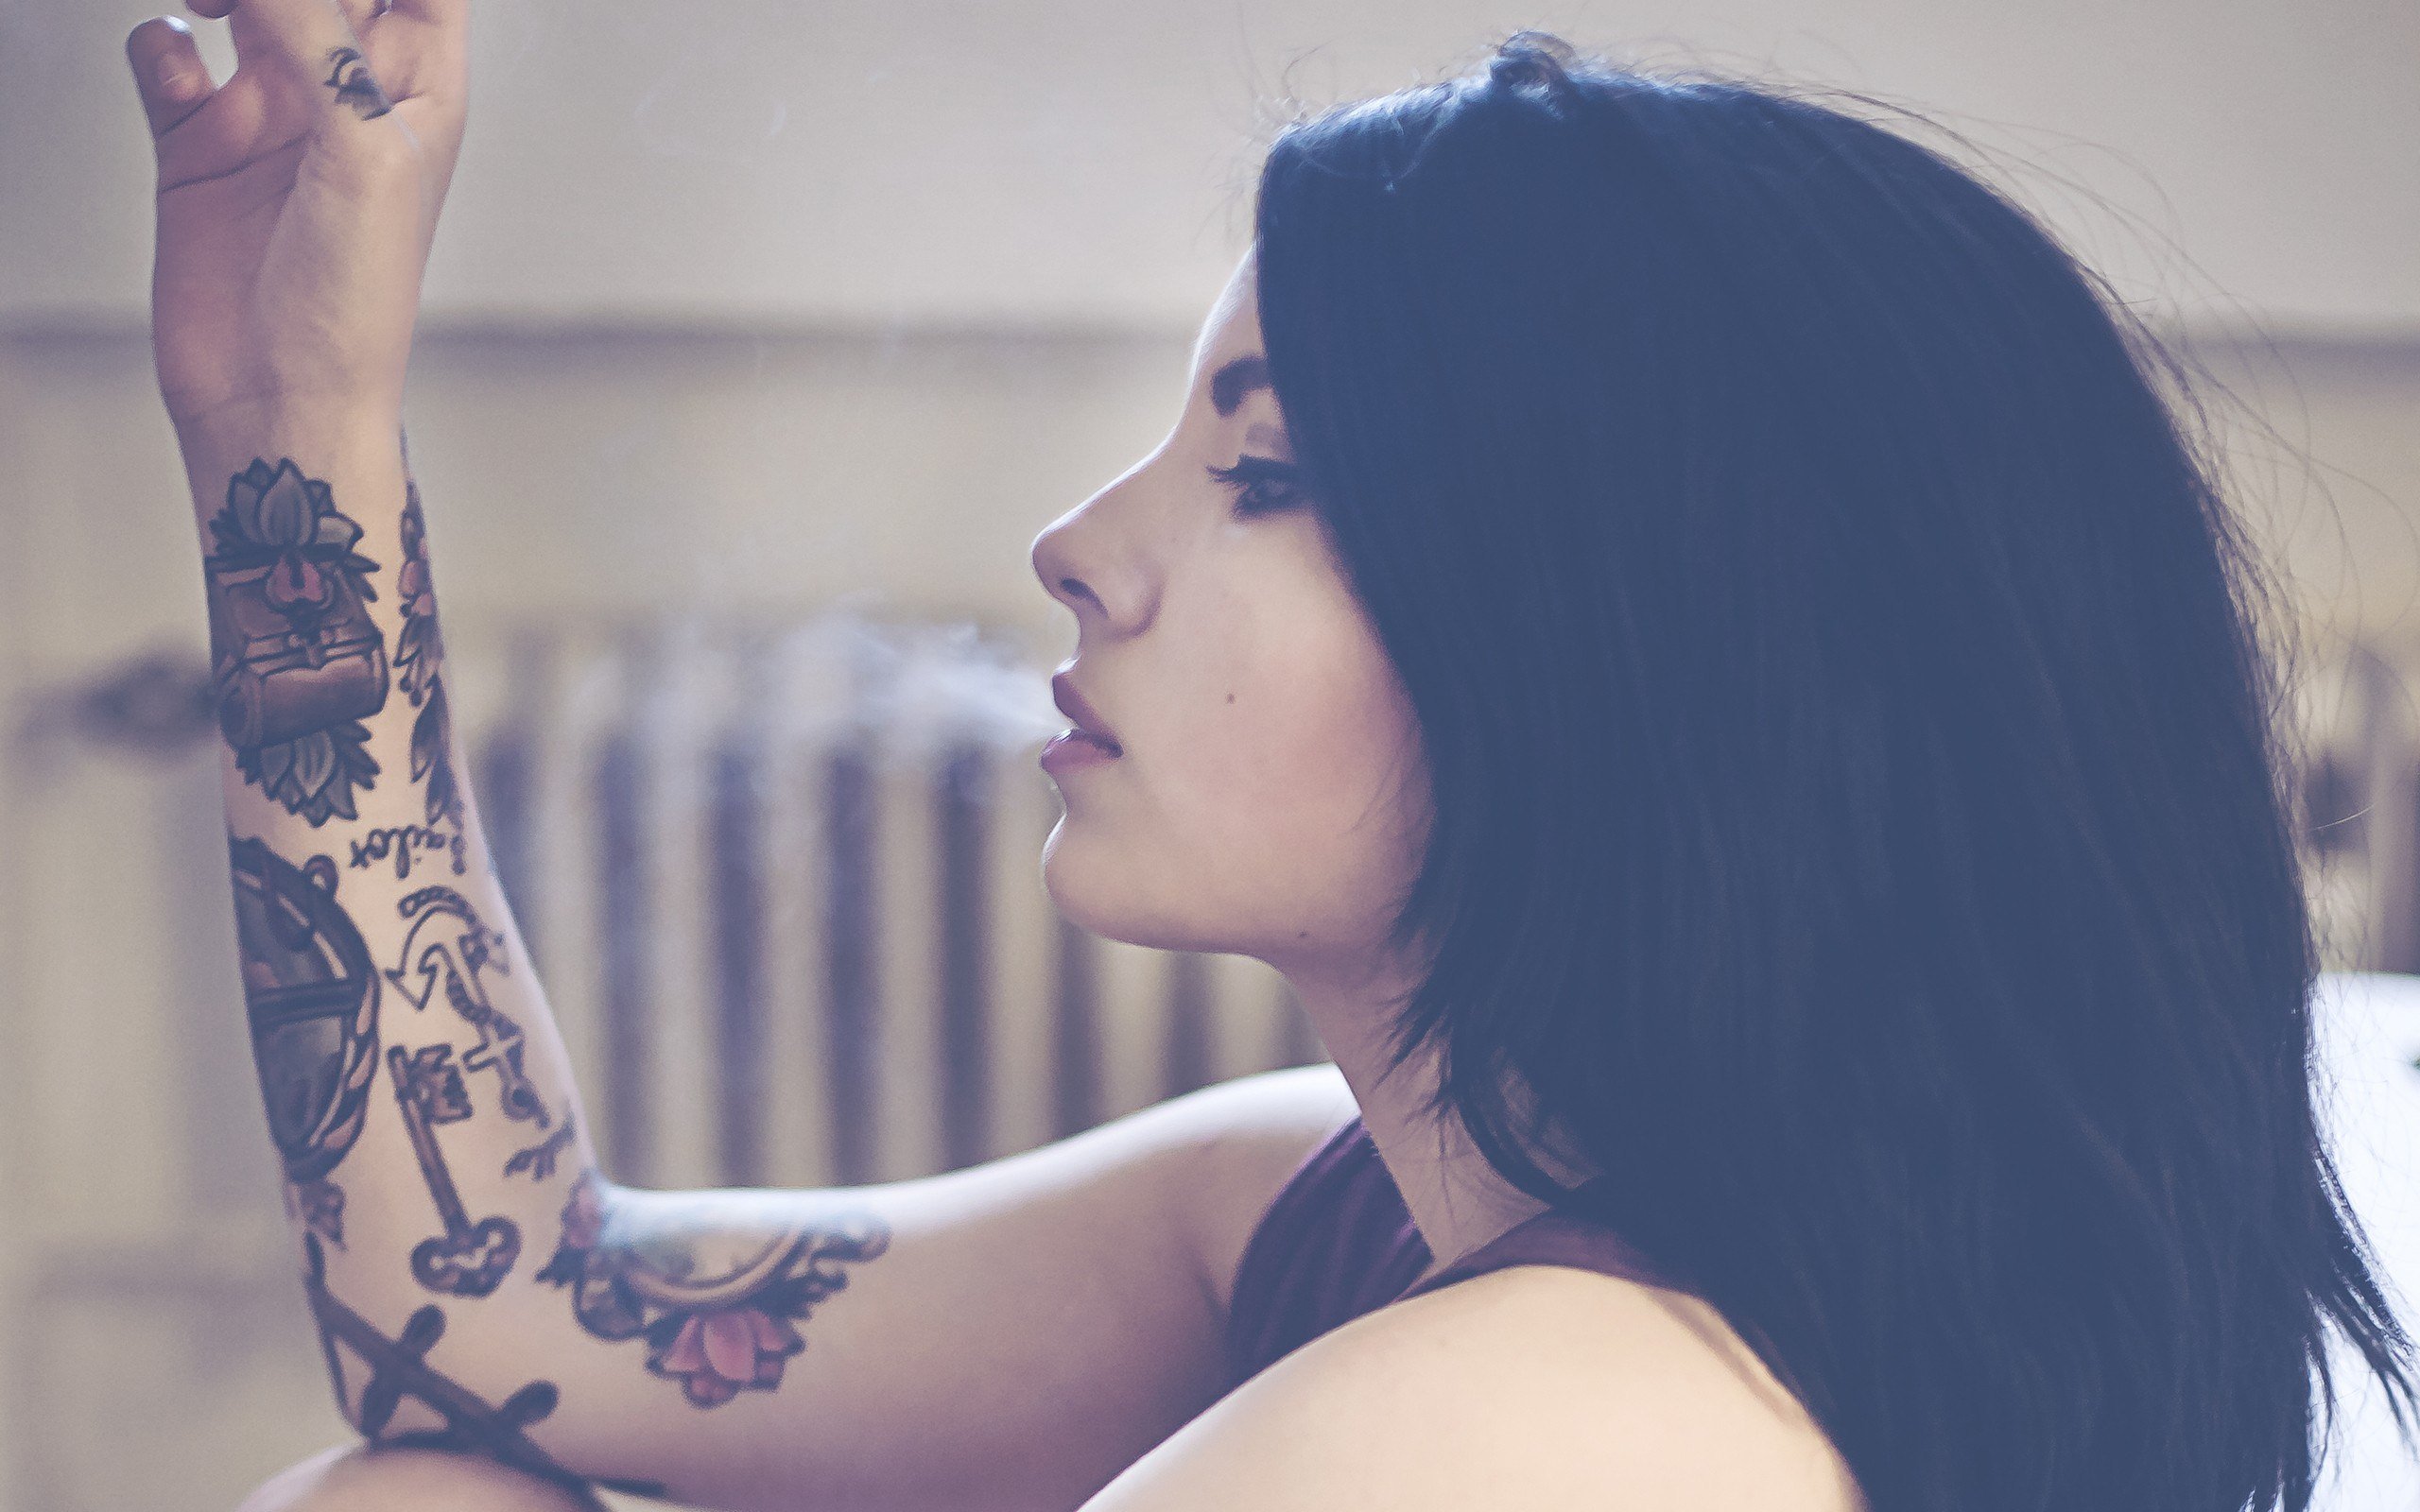 A girl smoking with half a tattoo sleeve